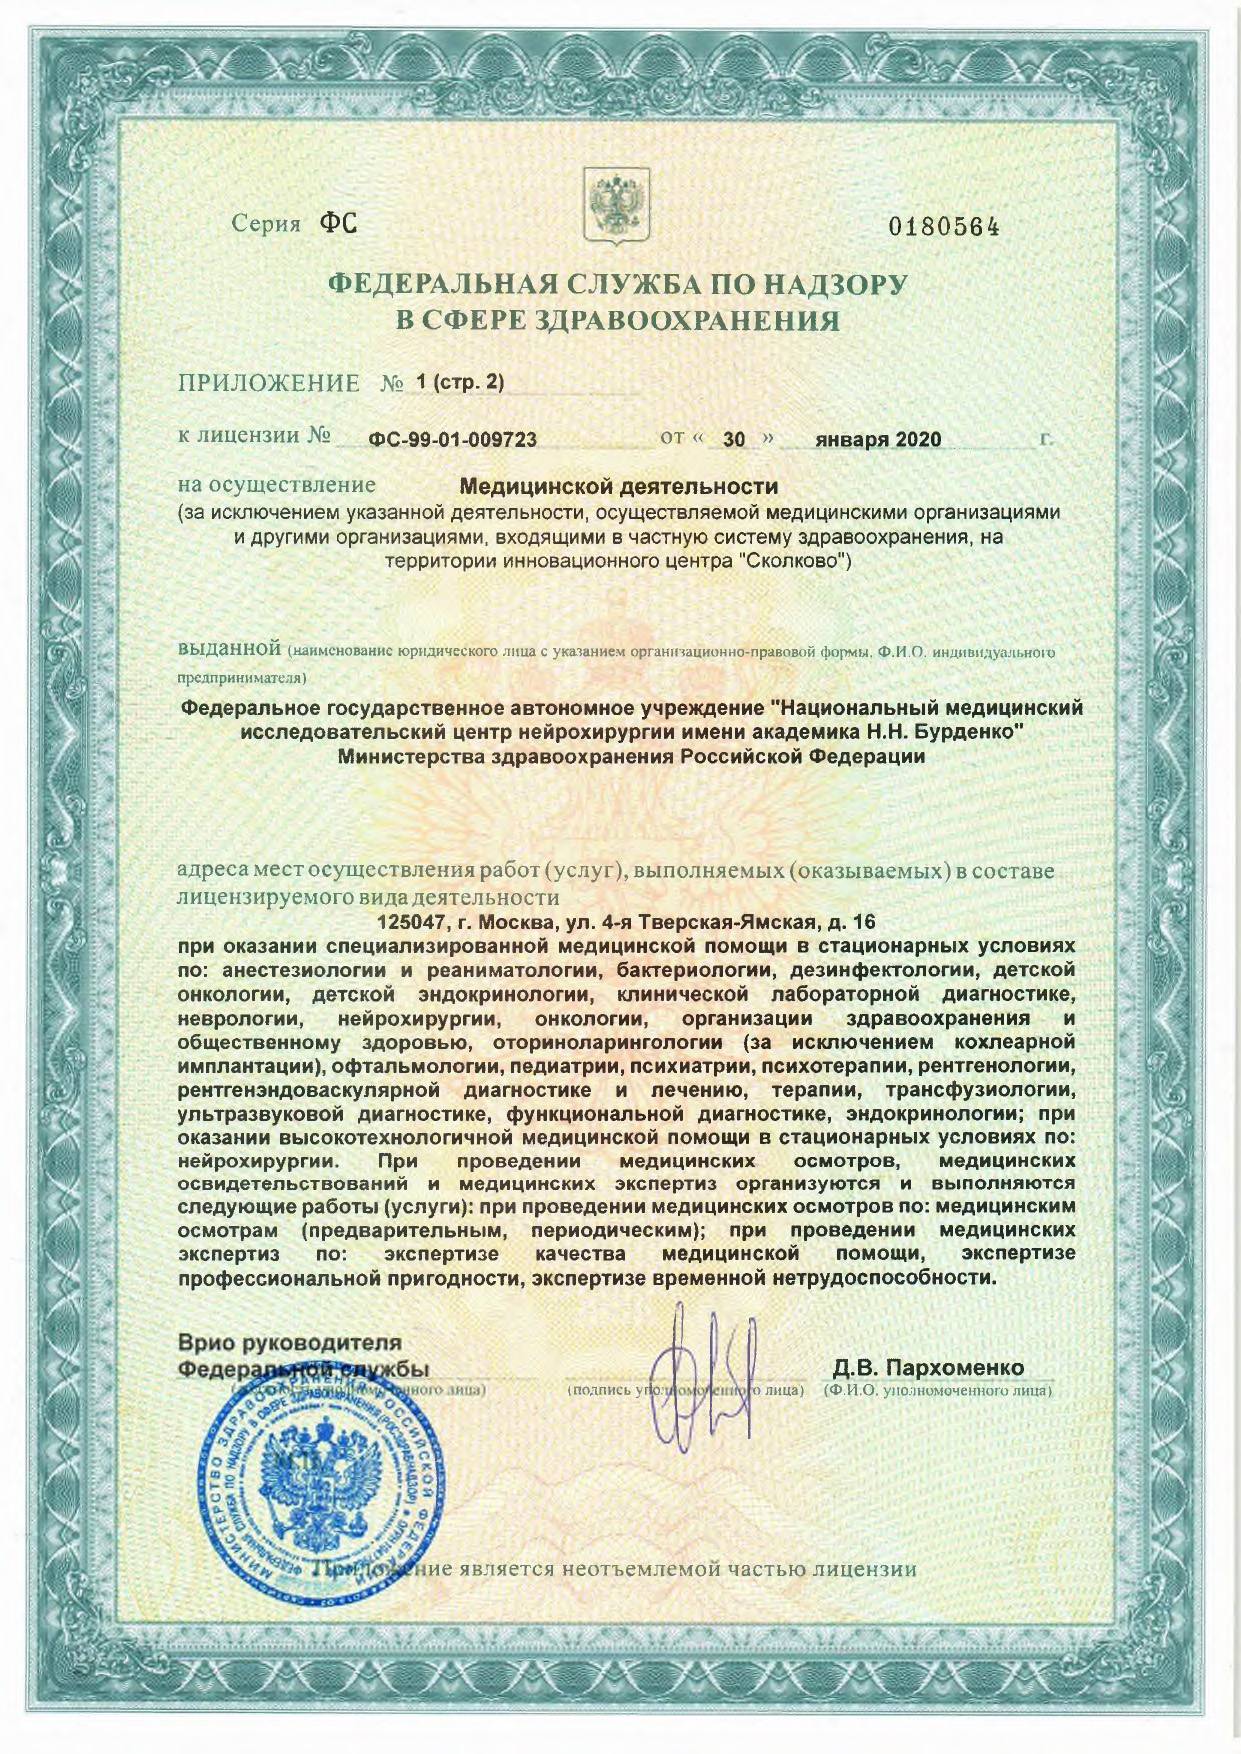 Институт нейрохирургии имени академика Н. Н. Бурденко лицензия №4